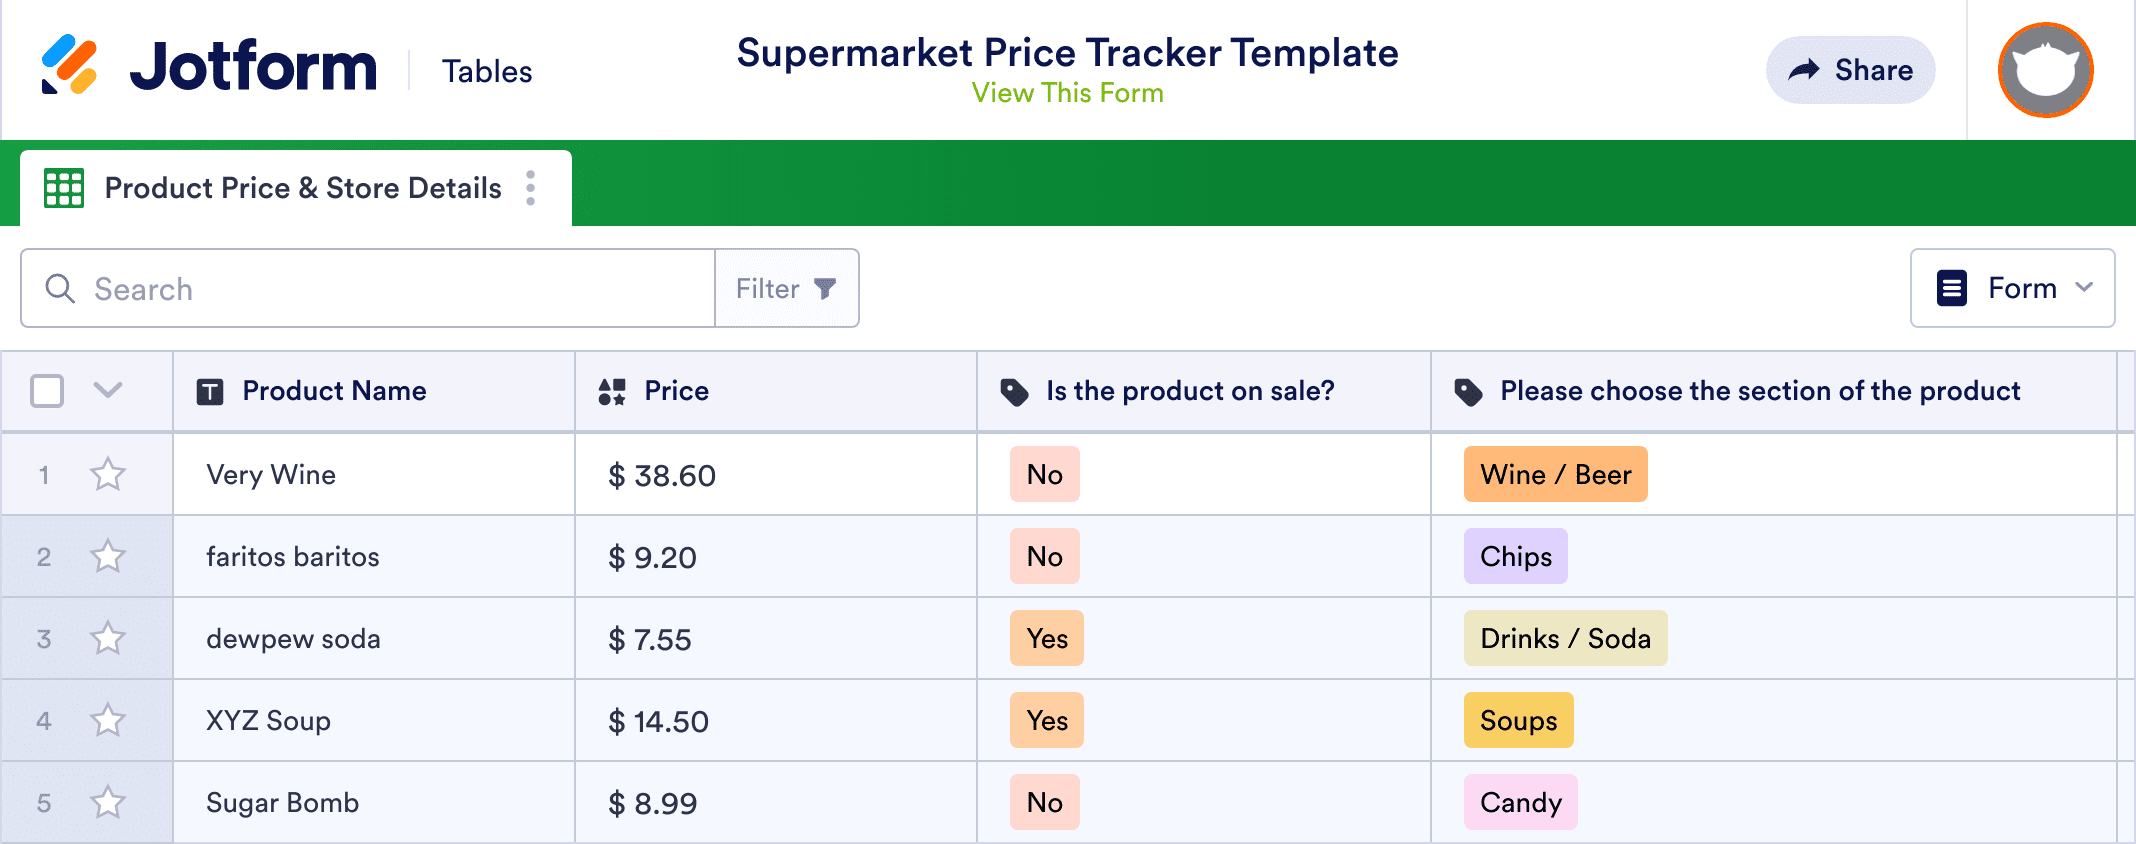 Supermarket Price Tracker Template